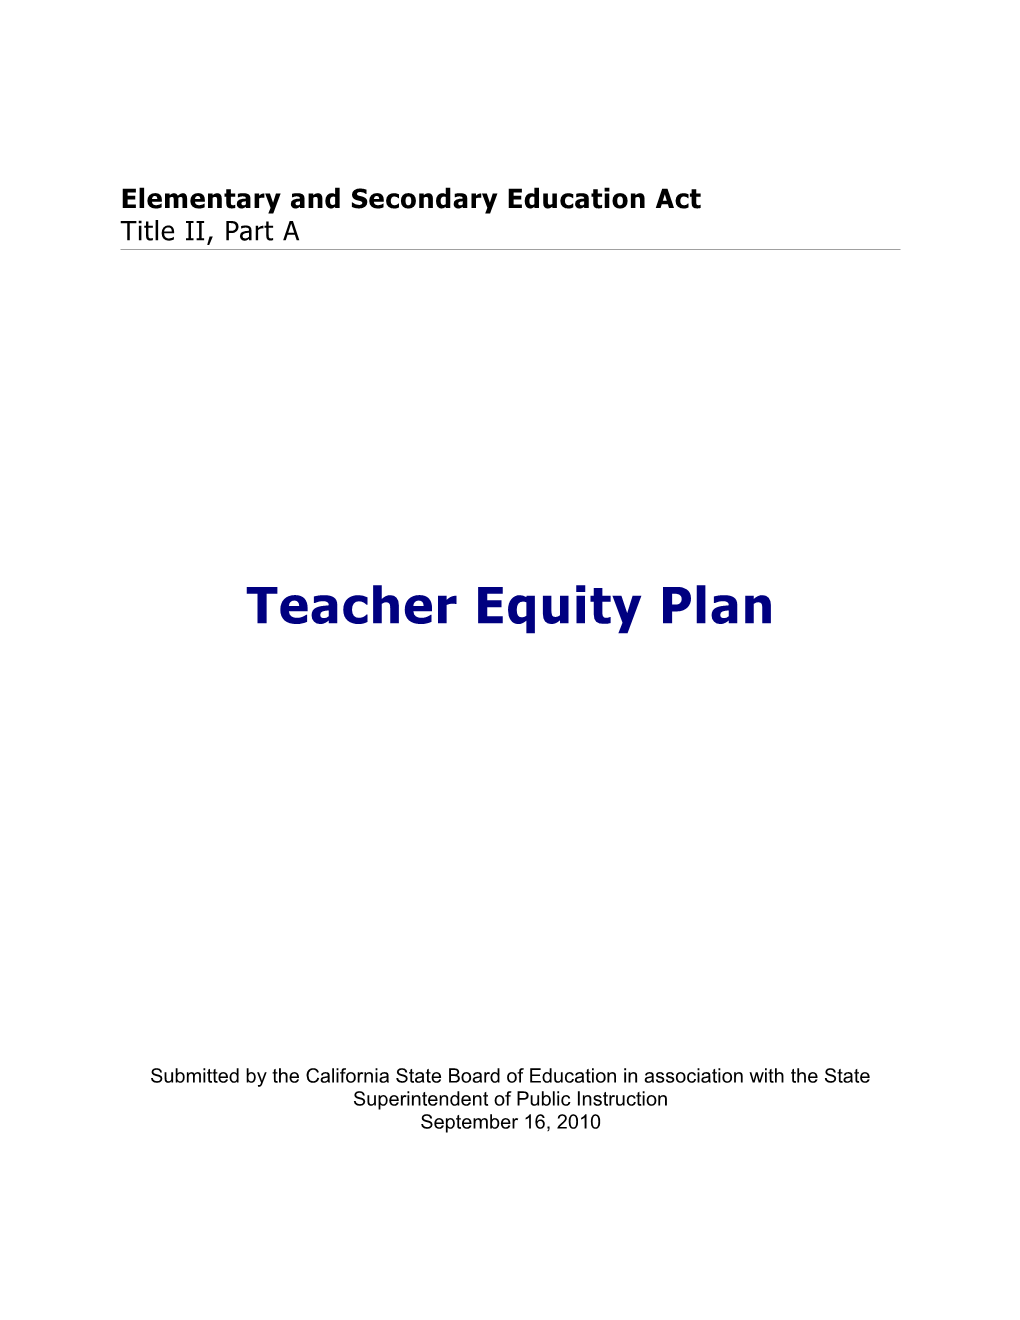 Teacher Equity Plan - NCLB (CA Dept Of Education)